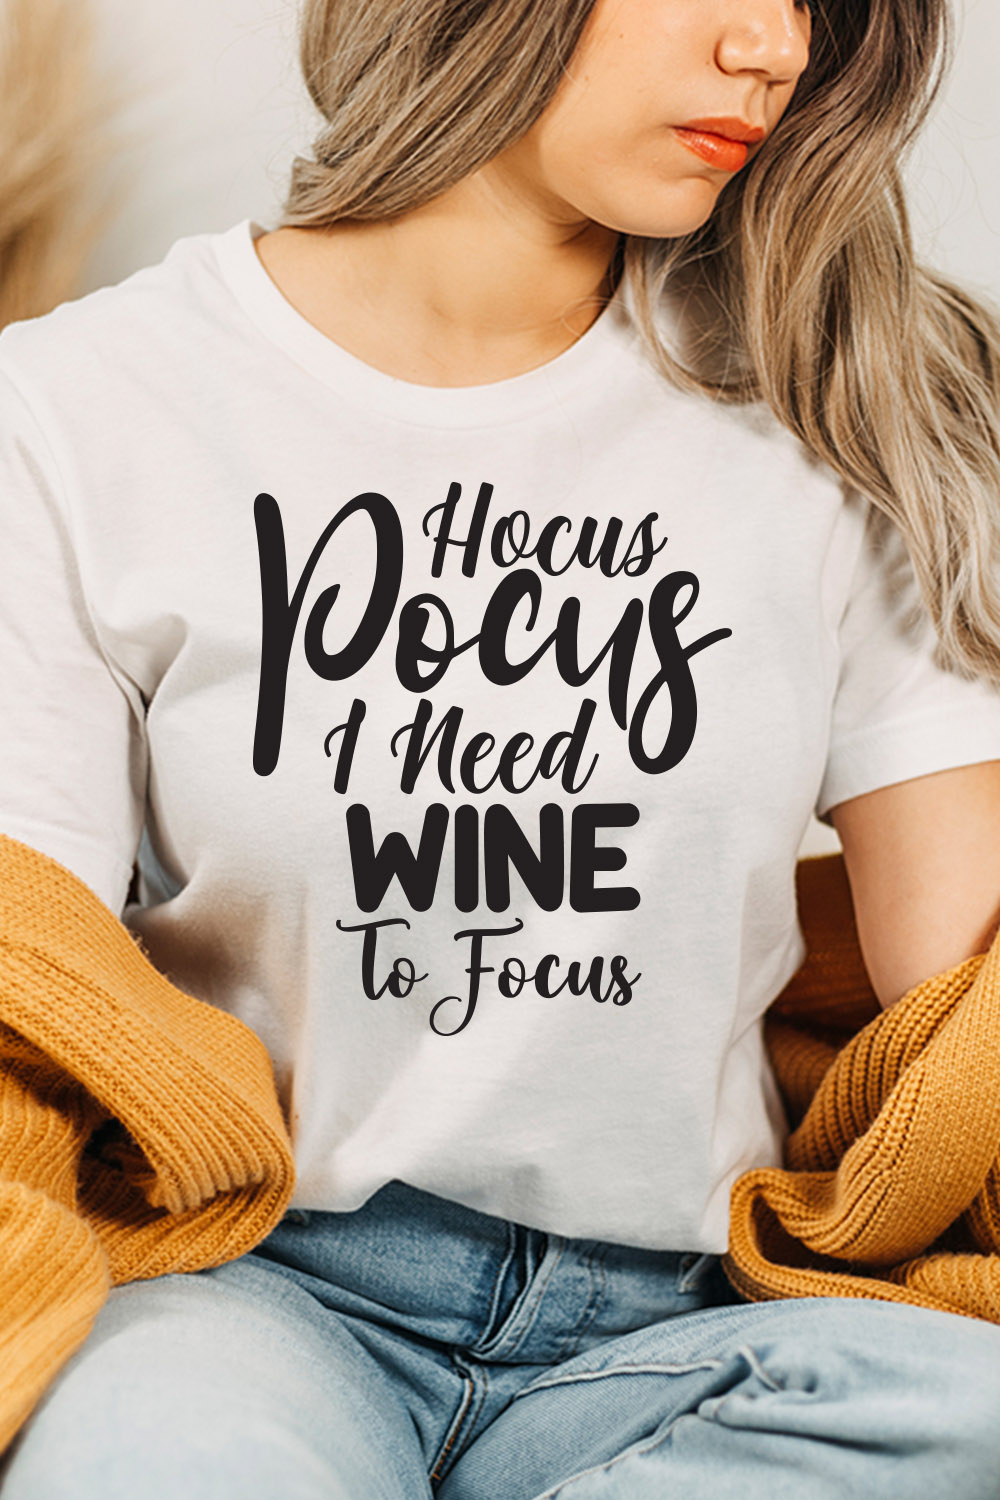 Hocus Pocus I Need Wine To Focus svg pinterest preview image.